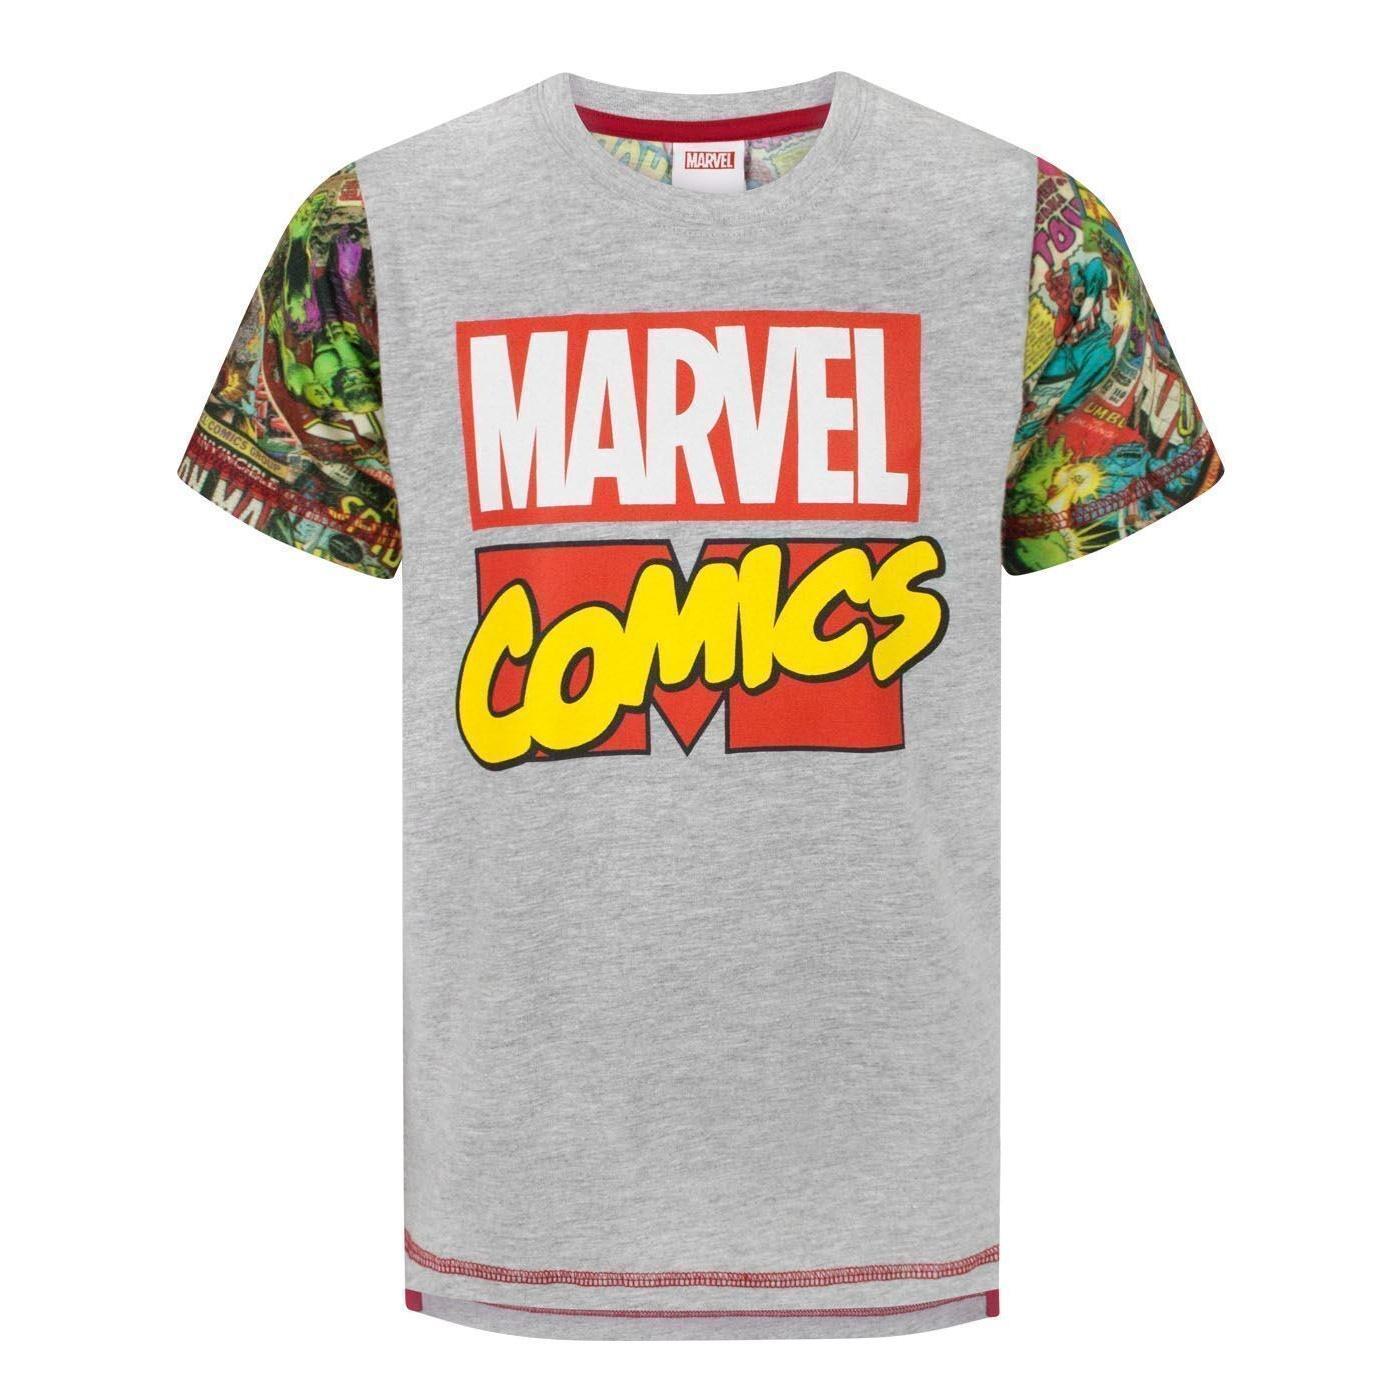 Marvel Comics Boys Printed T-Shirt (Heather Grey/Red/Green) (3-4 Years)